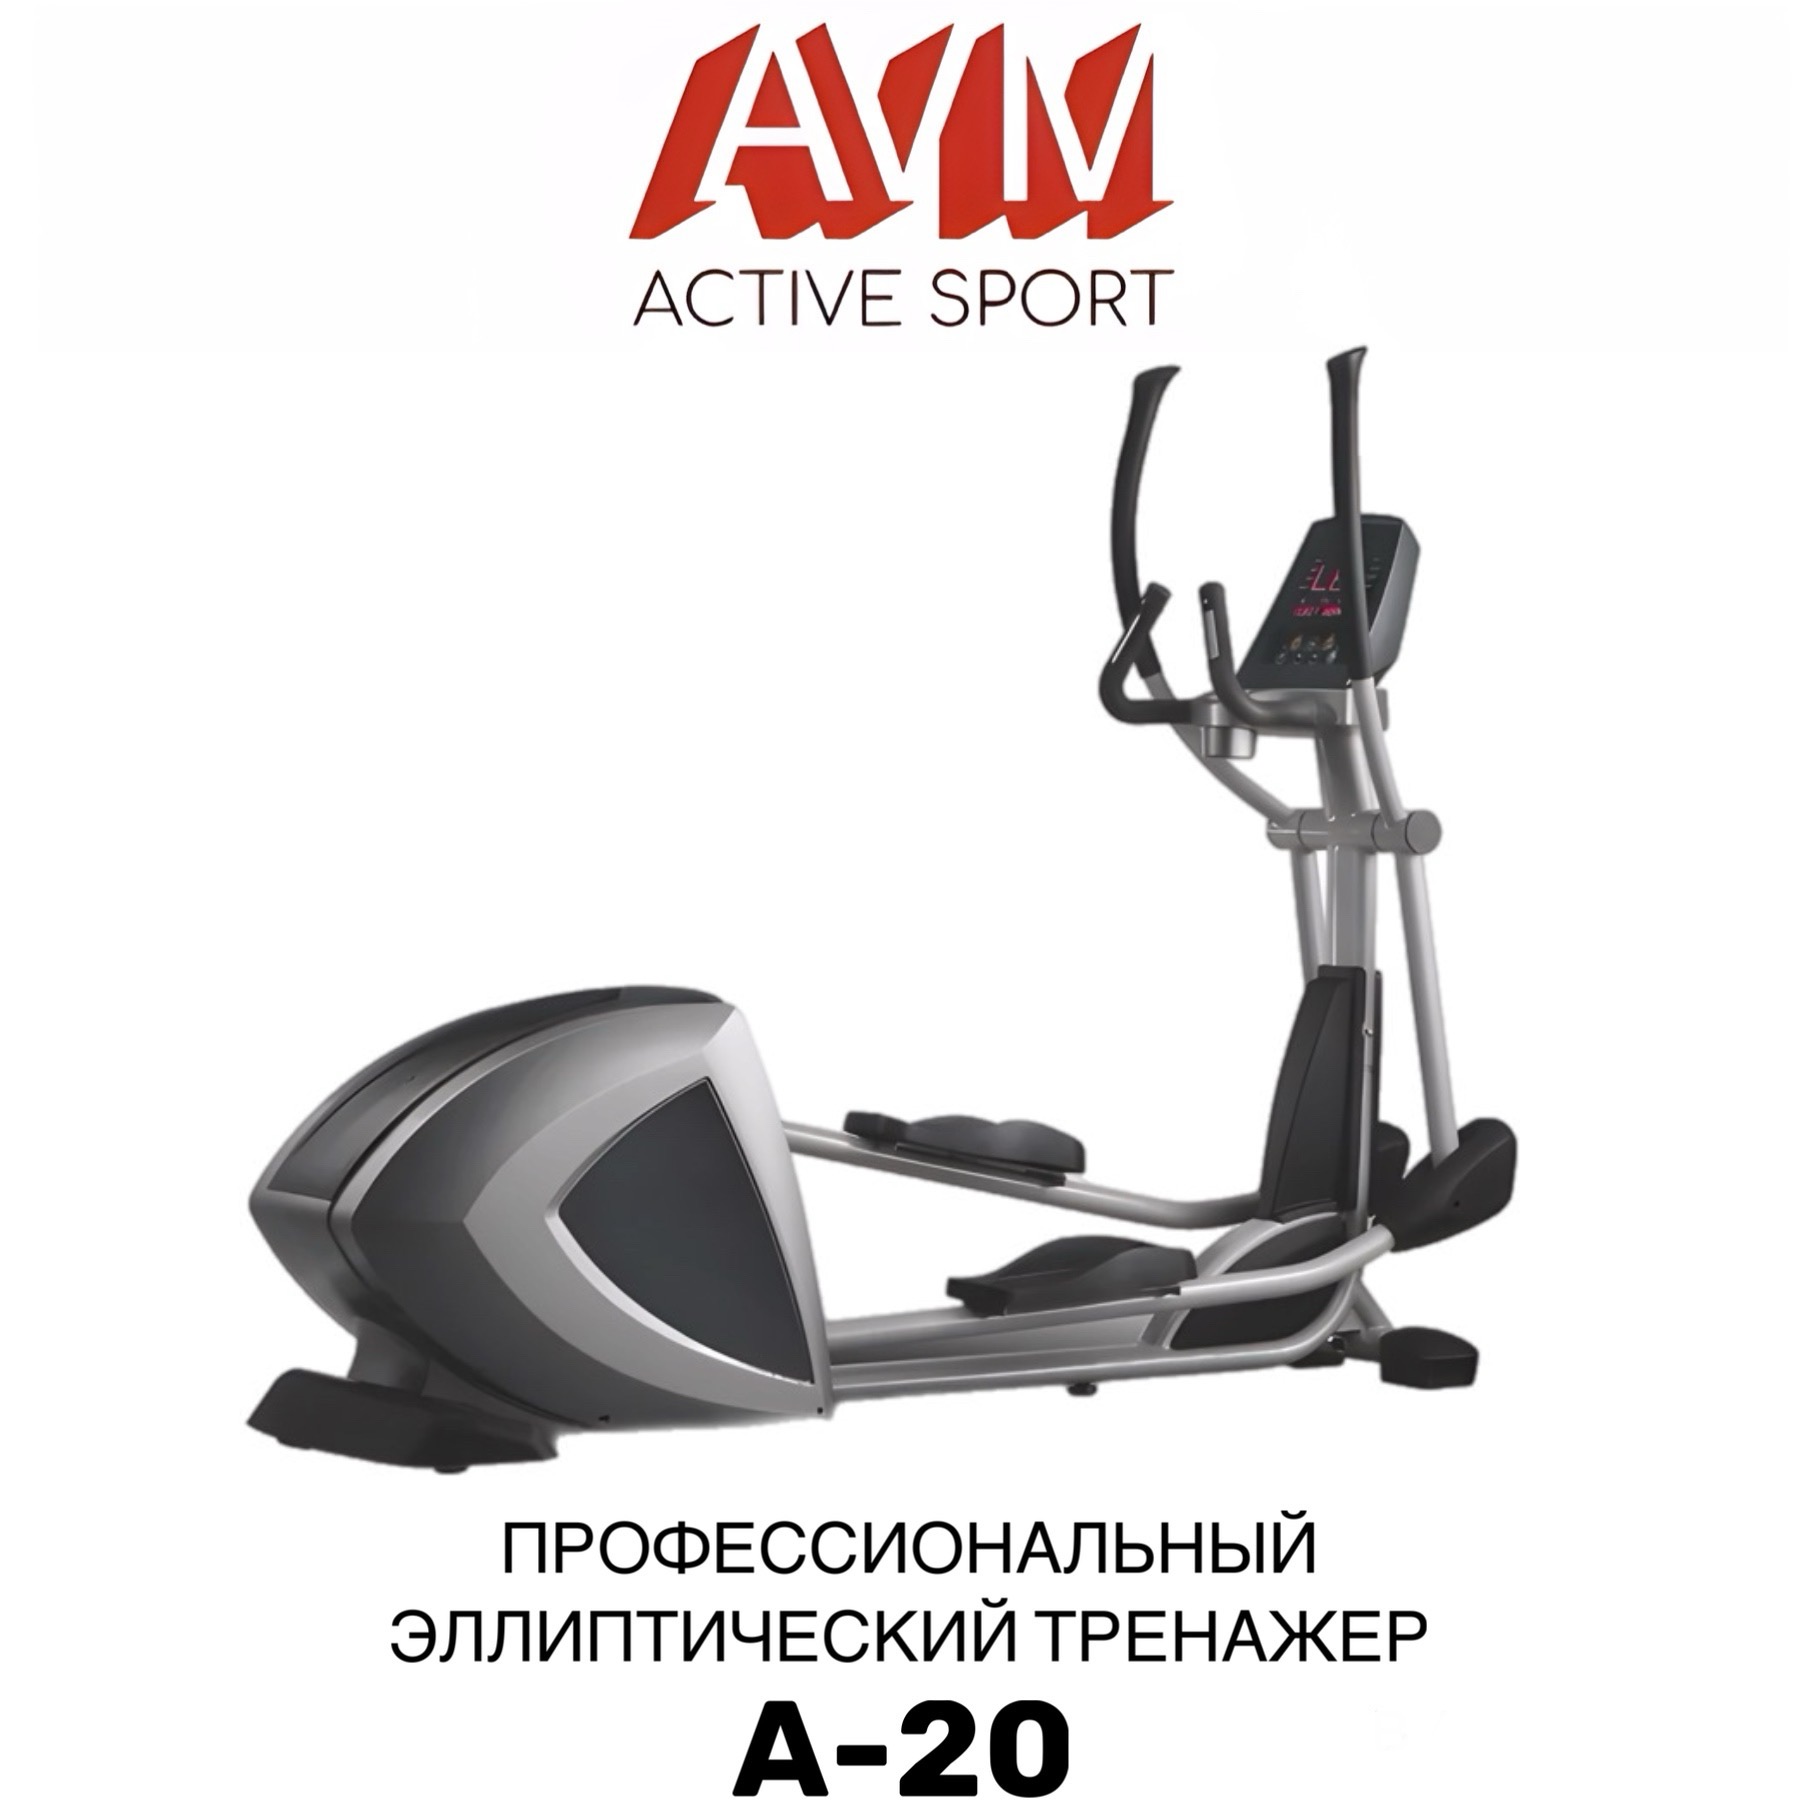 Эллиптический тренажер AVM Active Sport A-20